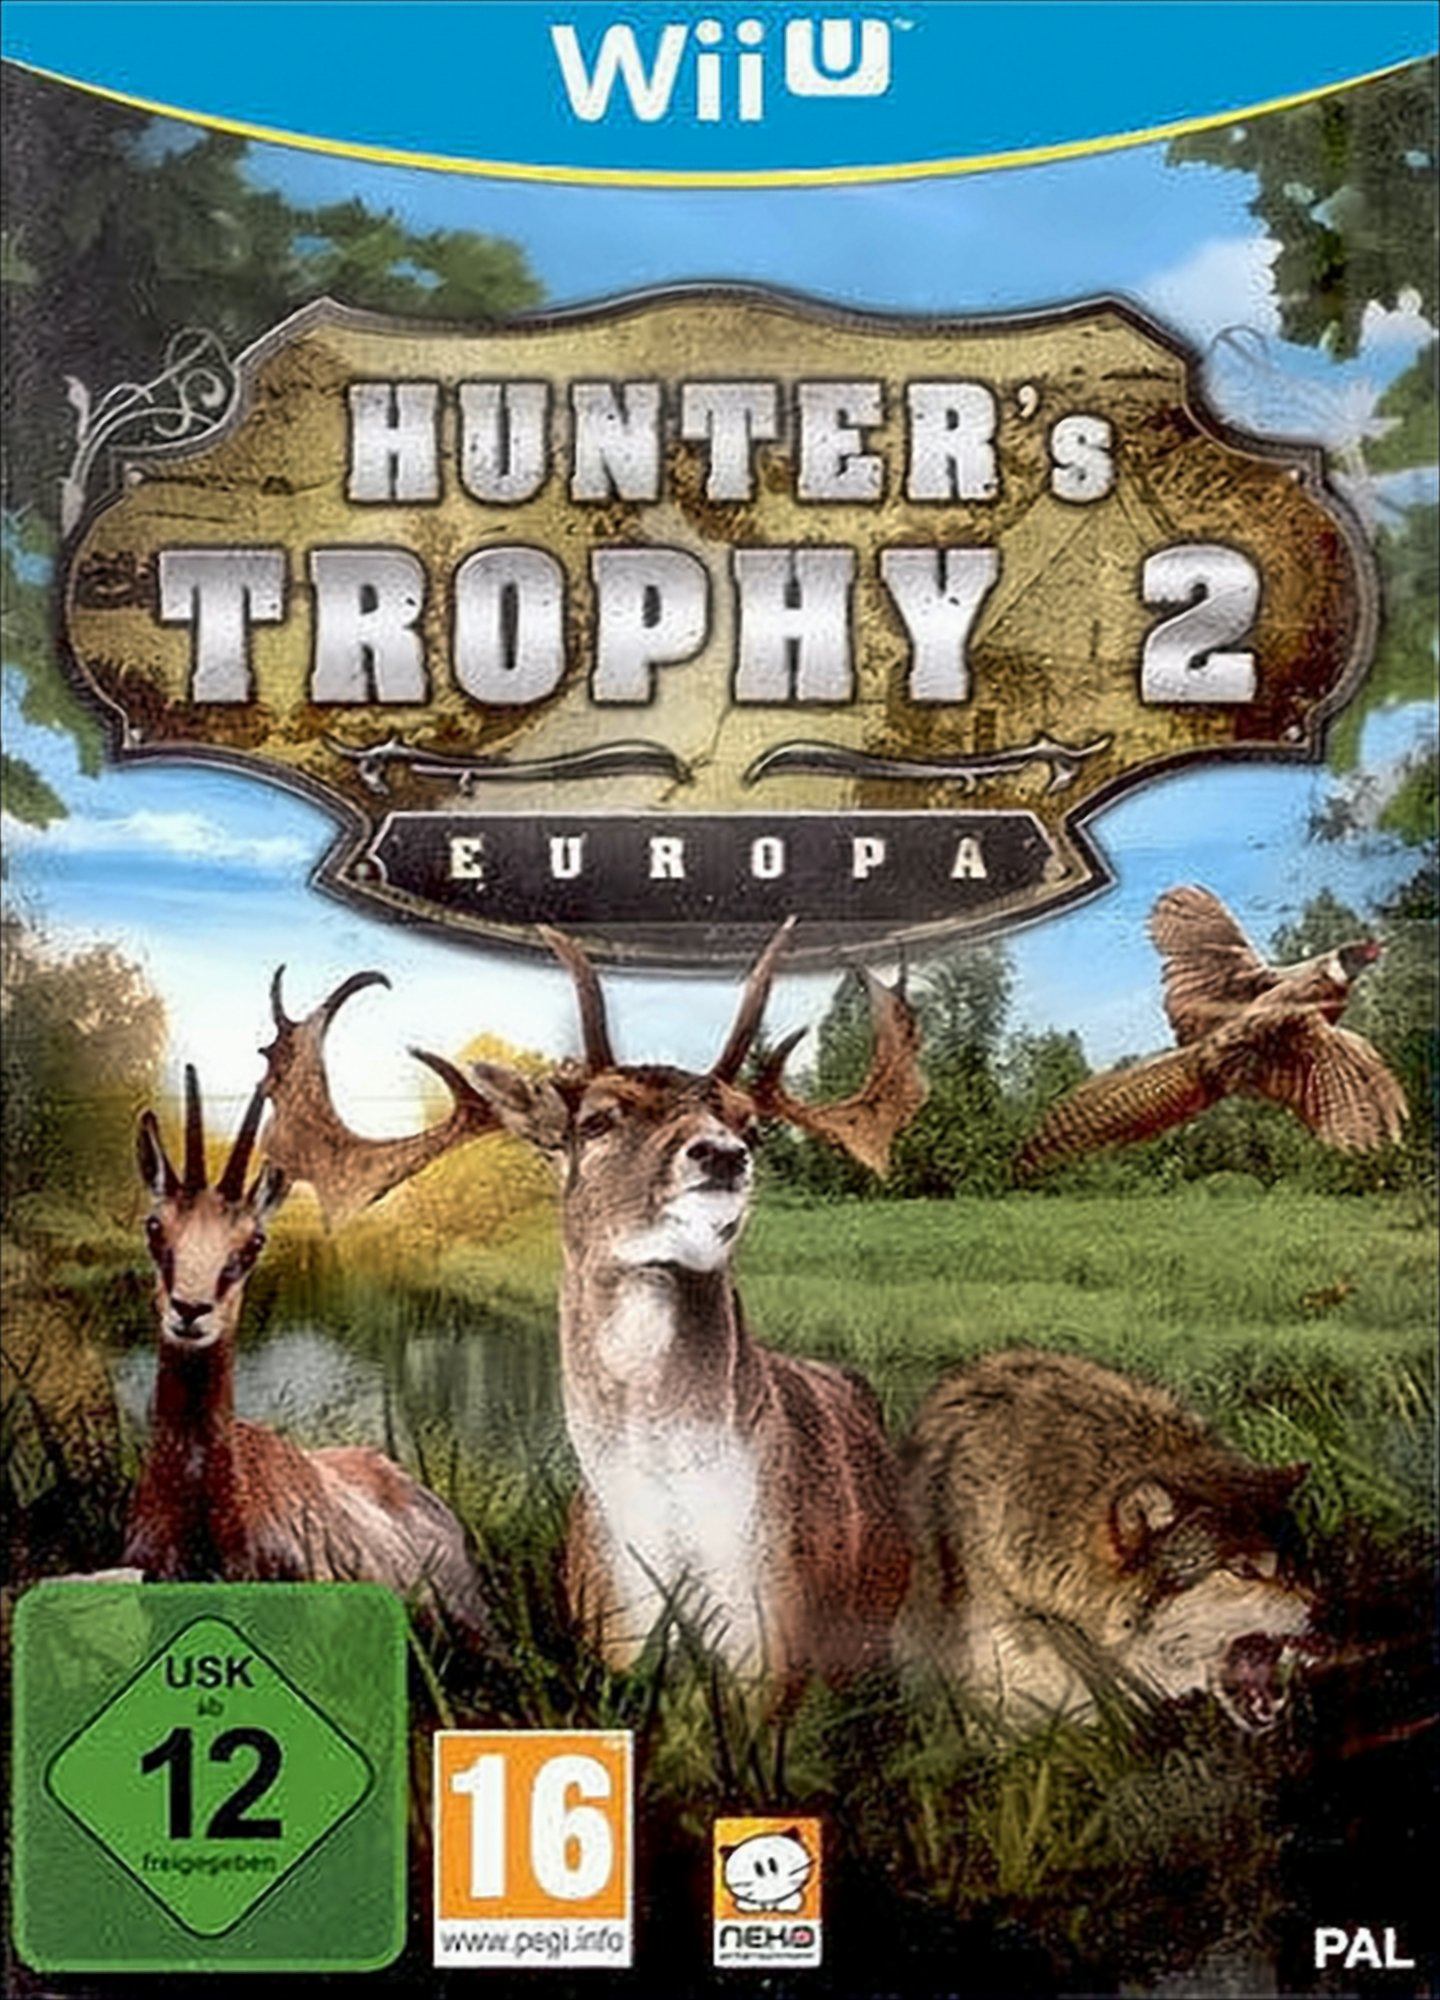 2 WiiU Wii] Europa Standalone Hunters [Nintendo Trophy -